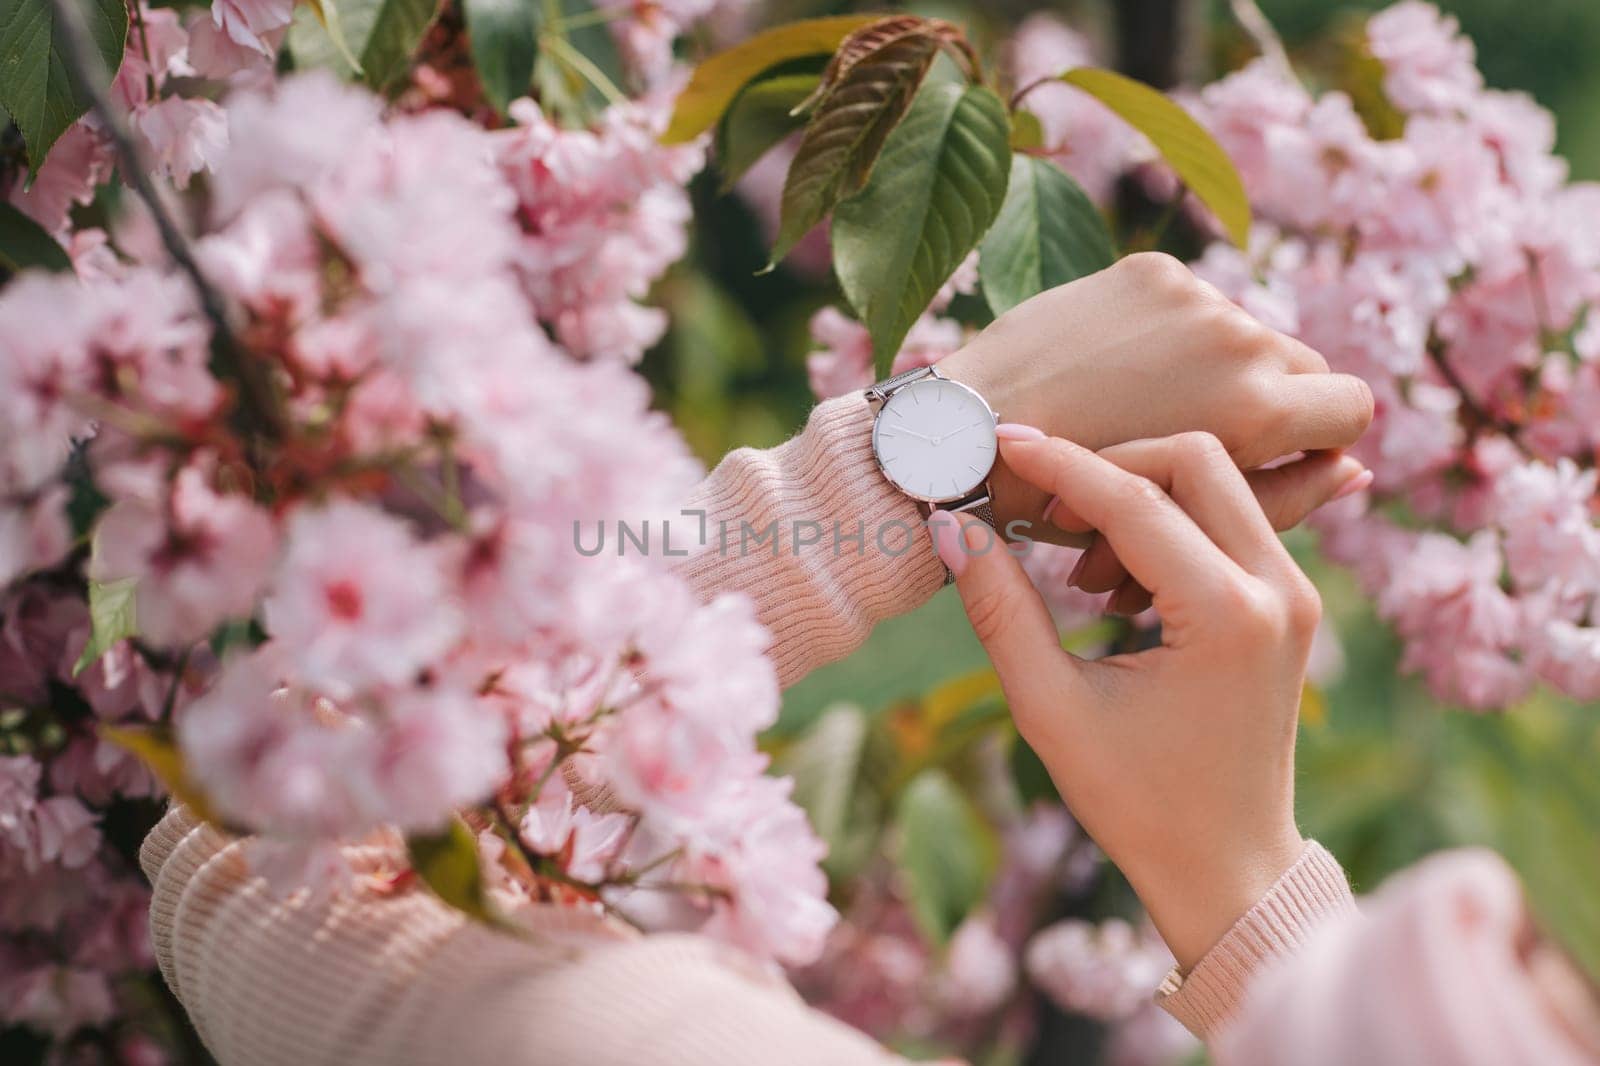 Stylish watch on woman hand by erstudio